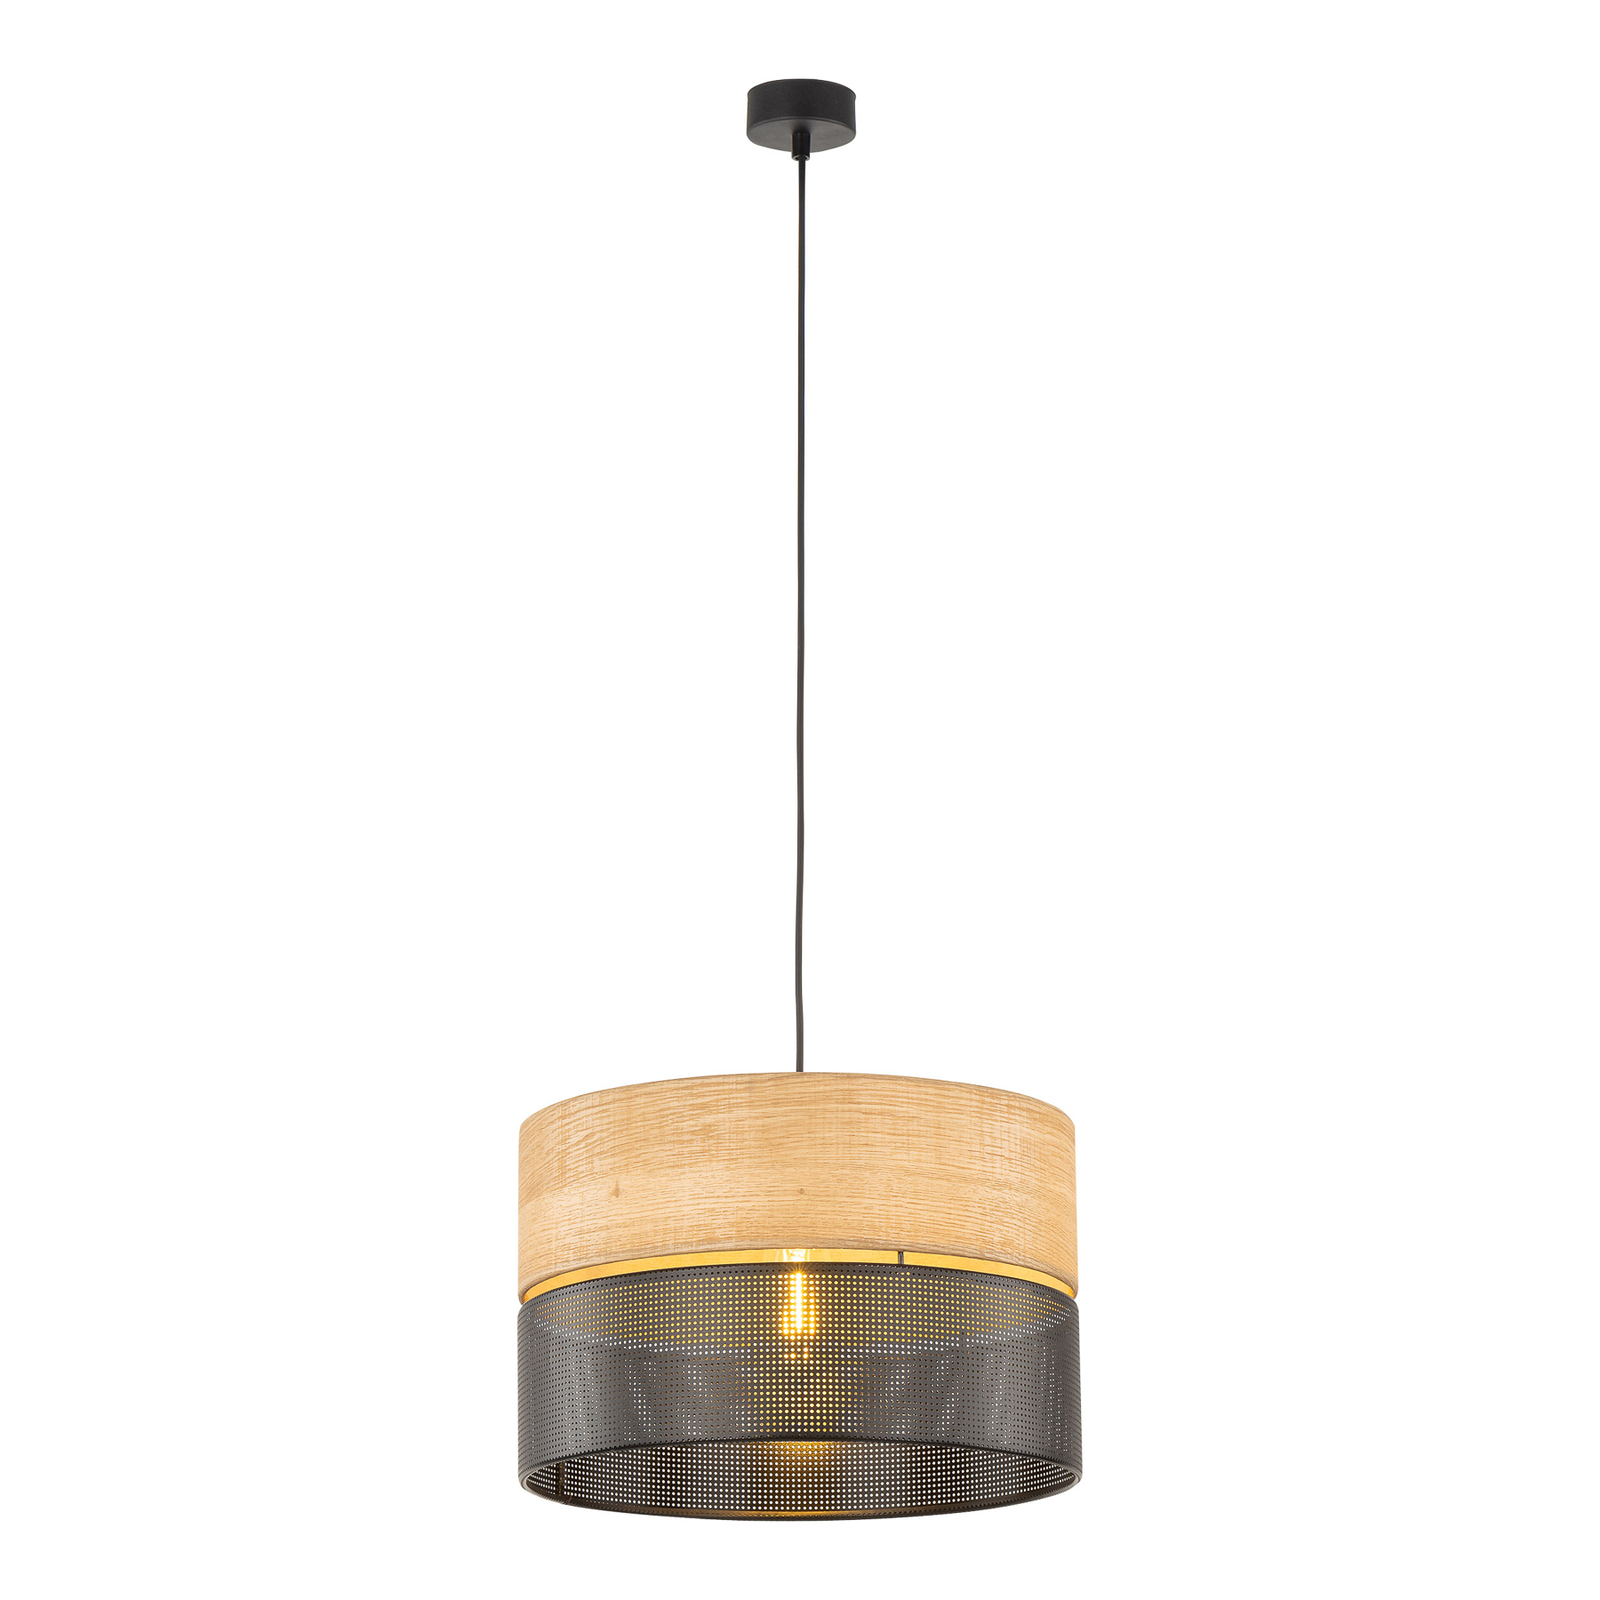 Nicol hanglamp, zwart/hout-effect, Ø 38 cm, 1-lamp, 1 x E27